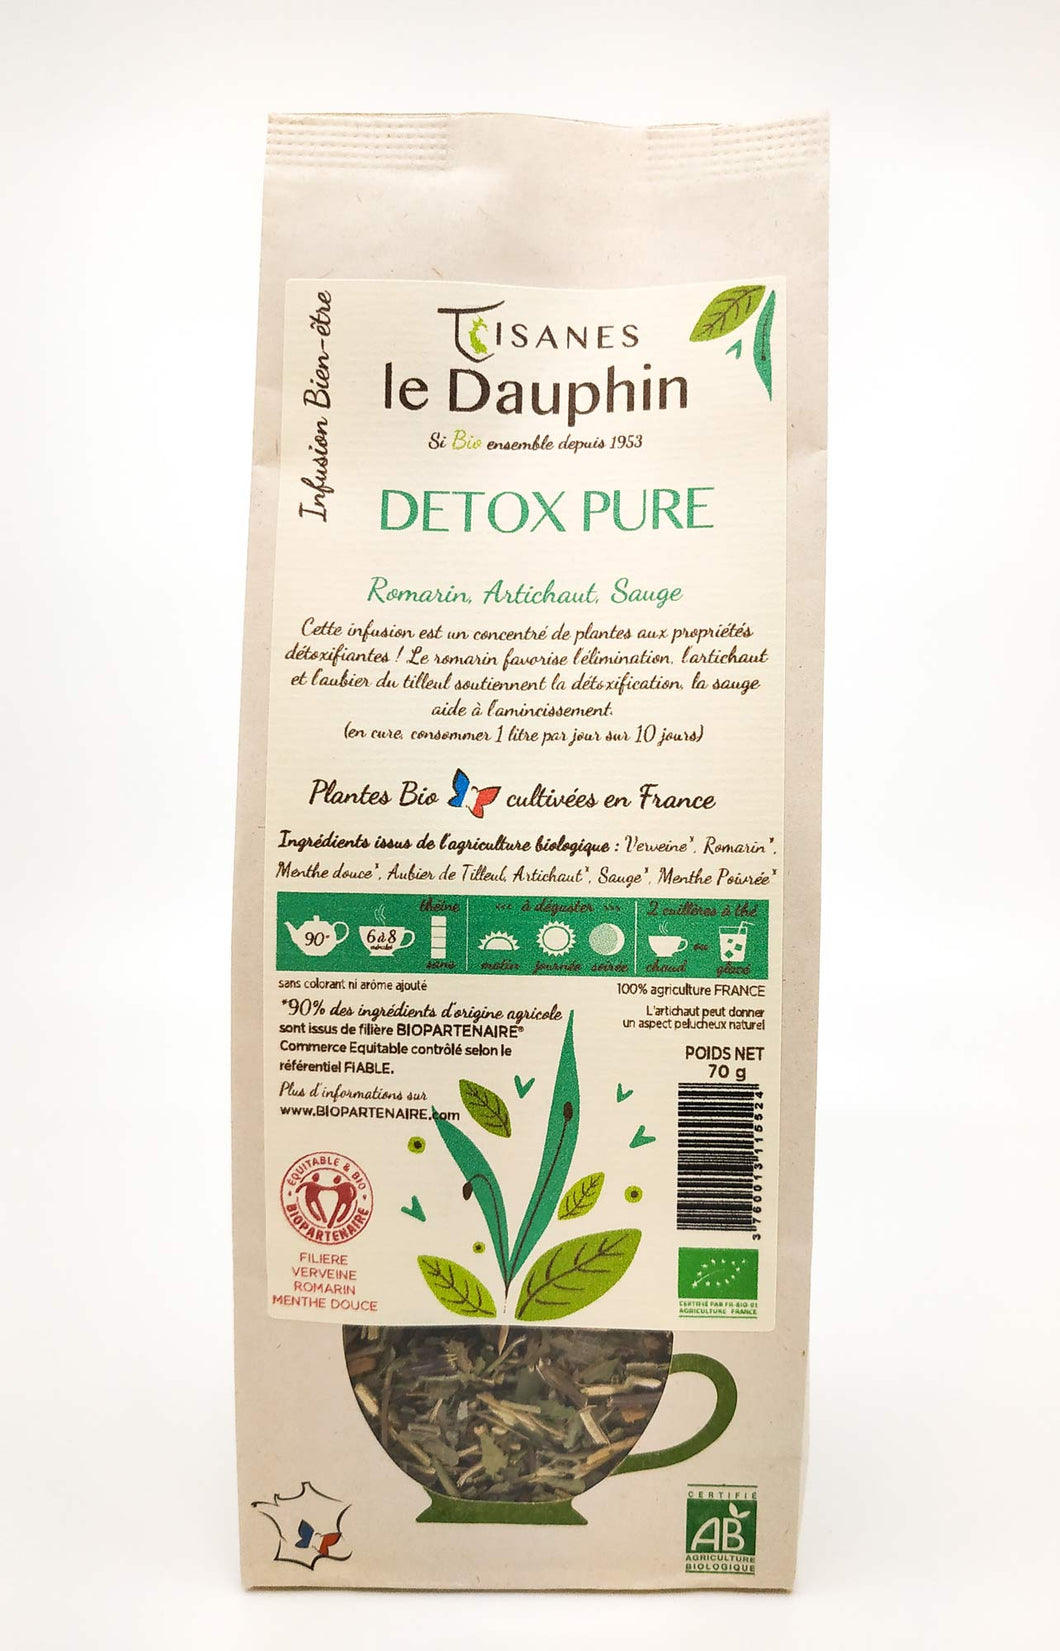 Detox Pure Tisanes le Dauphin